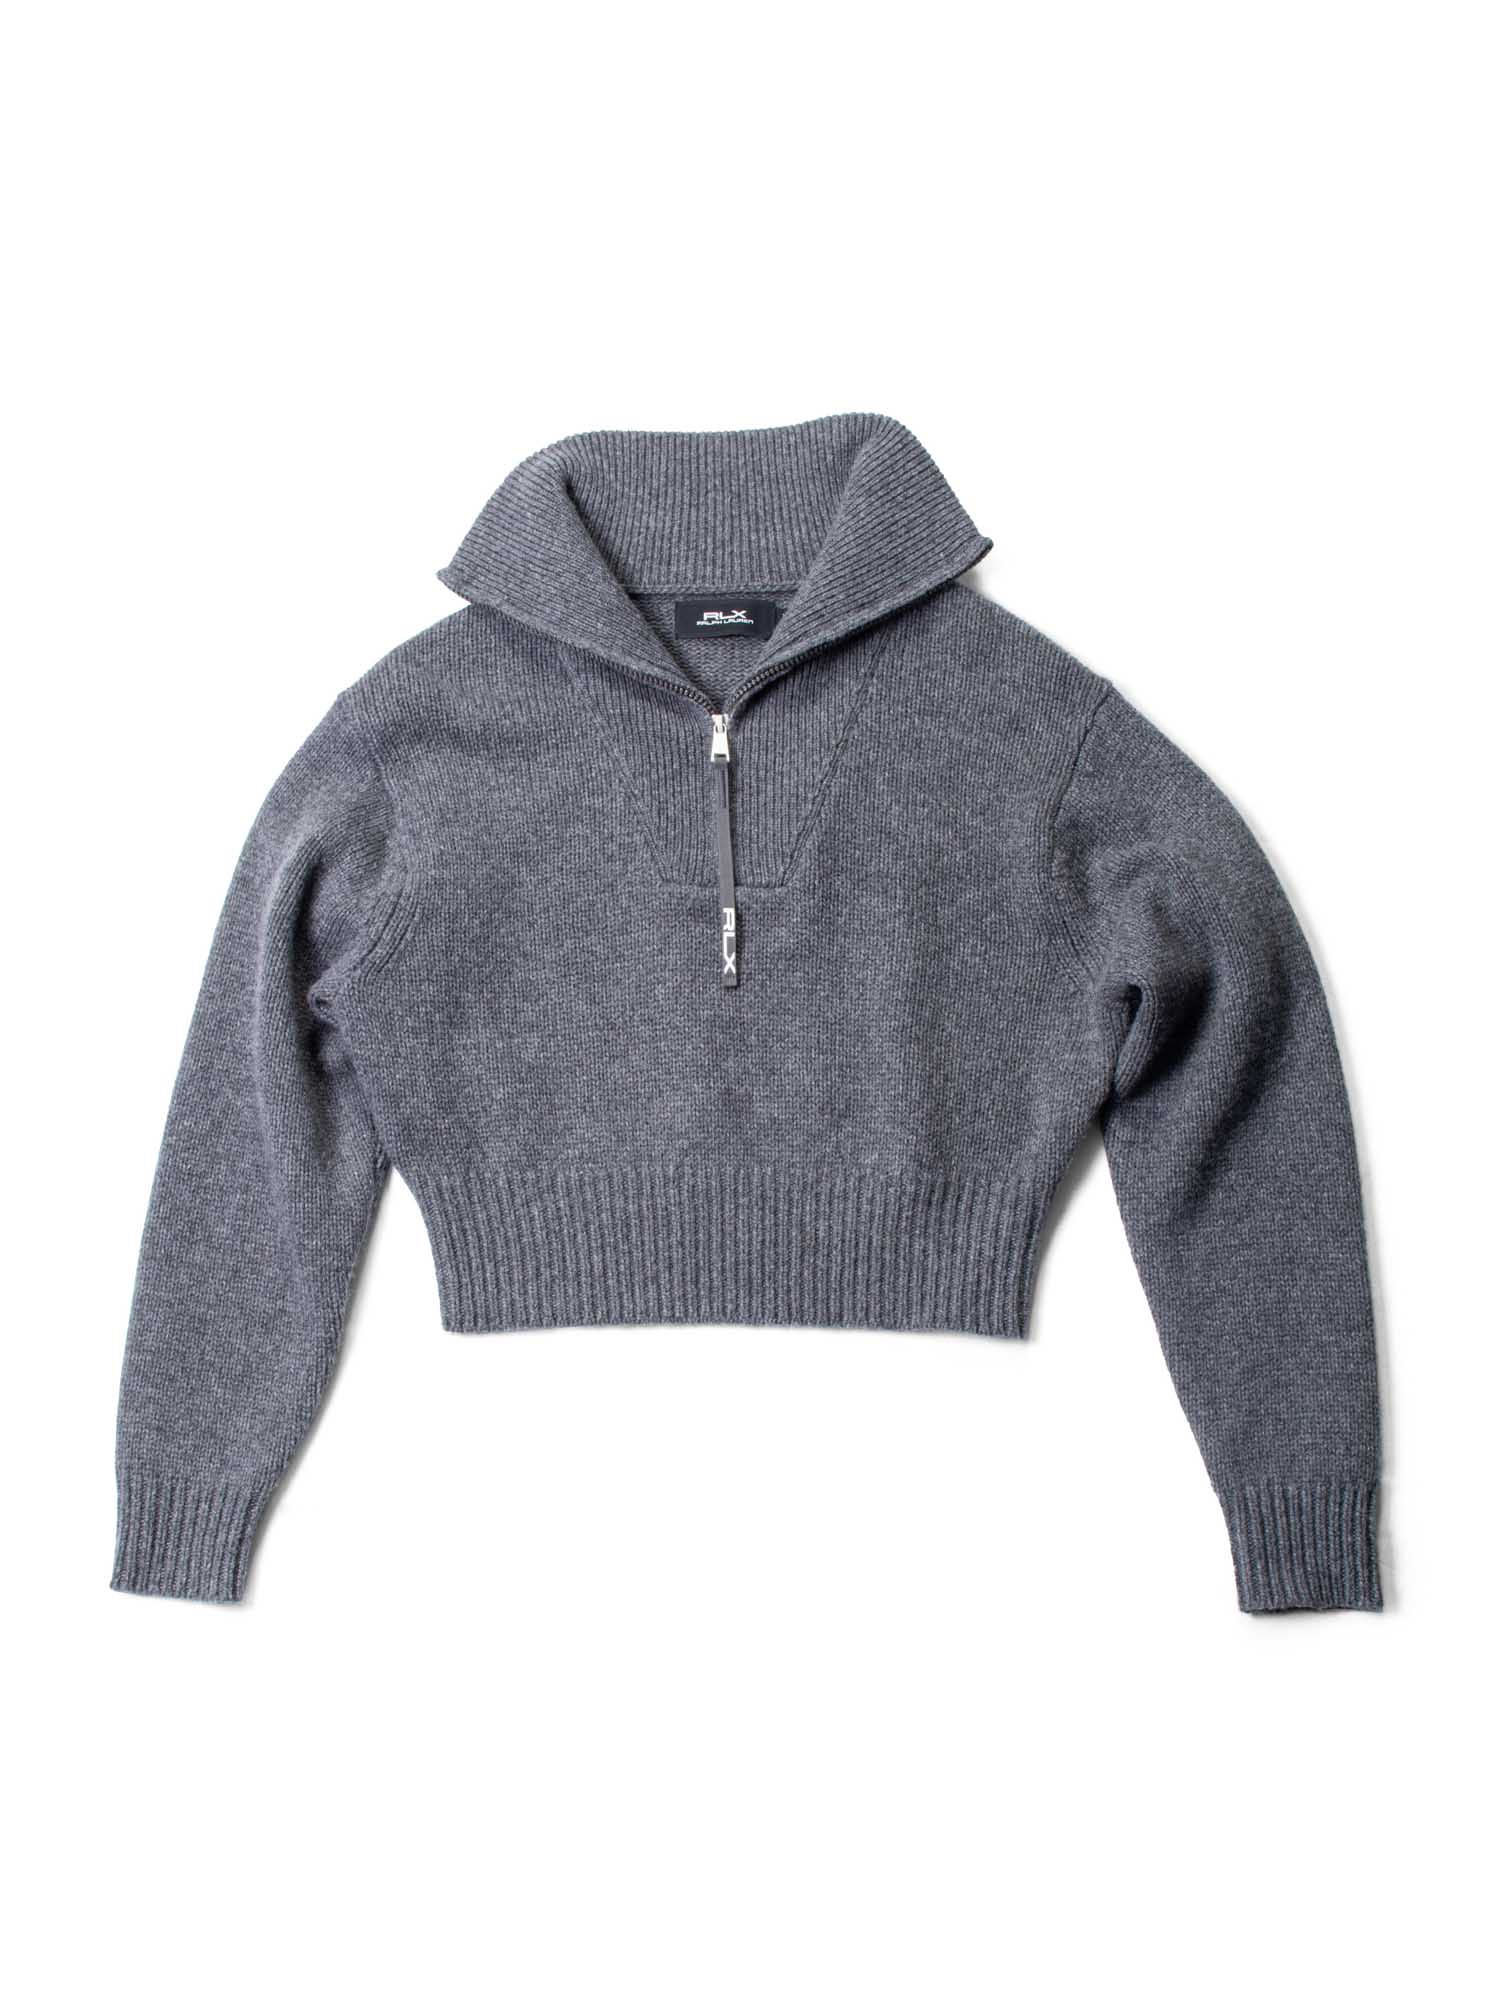 Ralph Lauren Chunky Wool Knit Oversized Cropped Turtle Neck Sweater Grey-designer resale